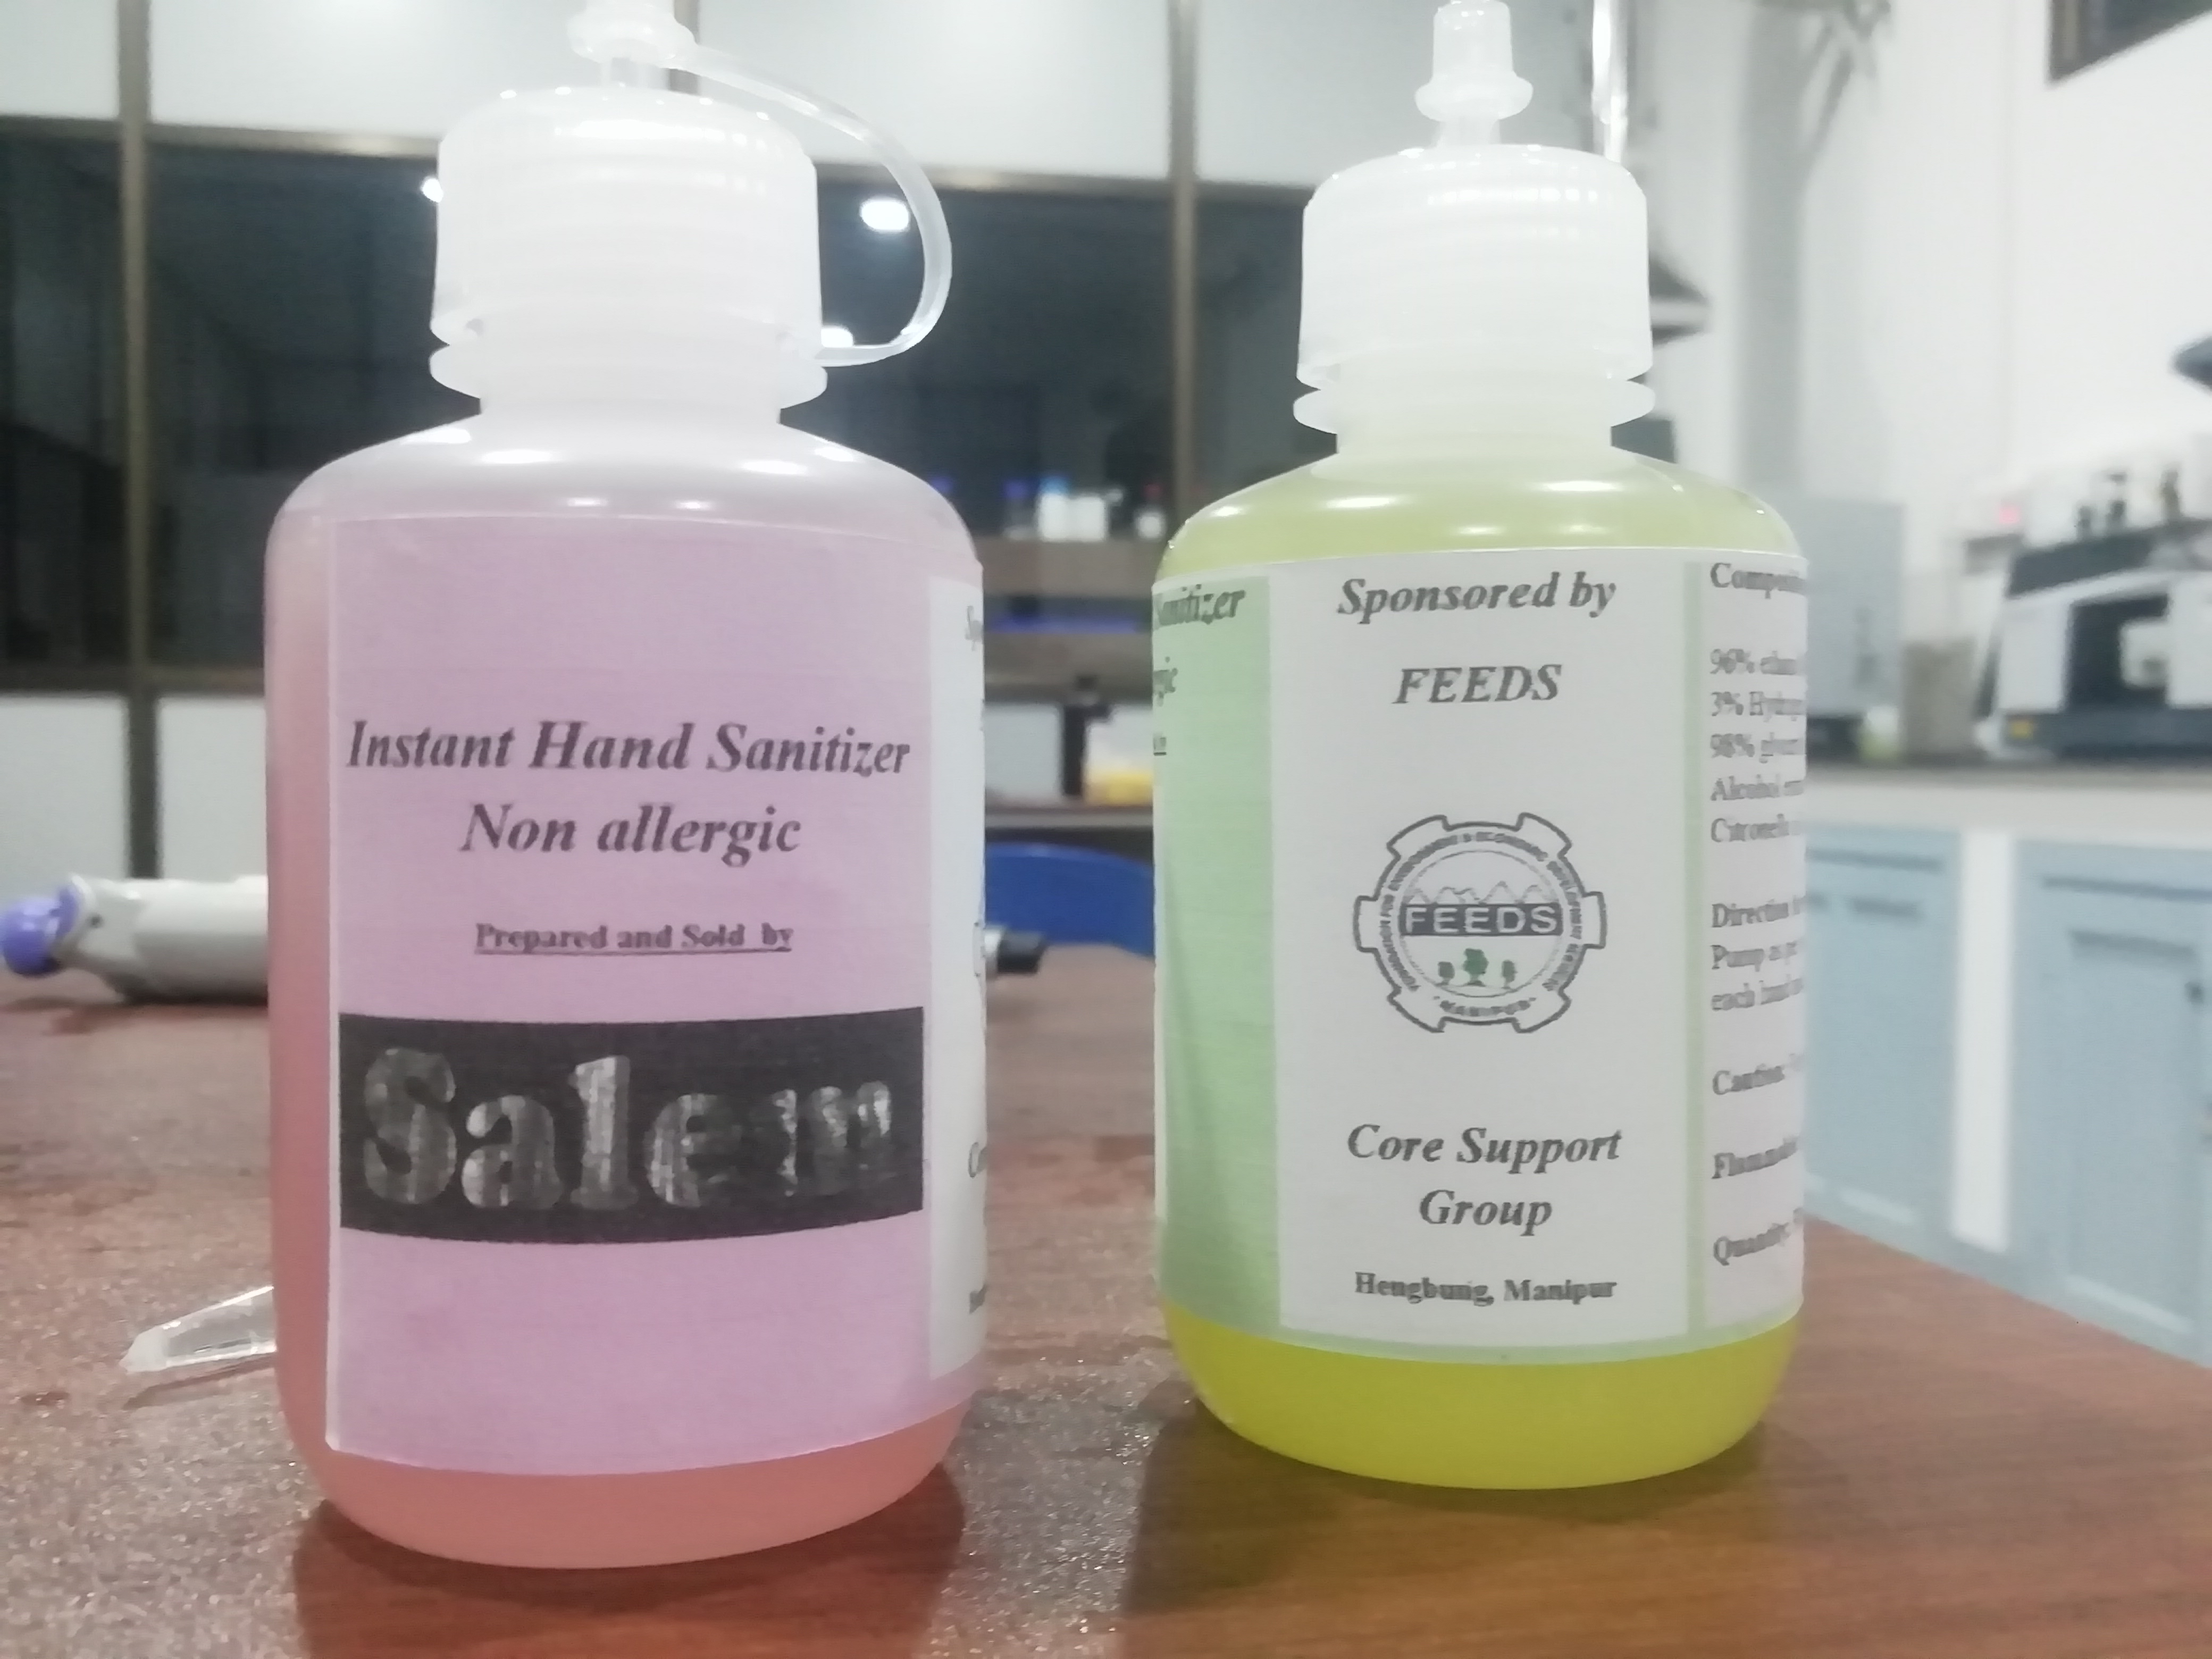  Alcohol-based herbal hand sanitizer (Instant Hand Sanitizer)